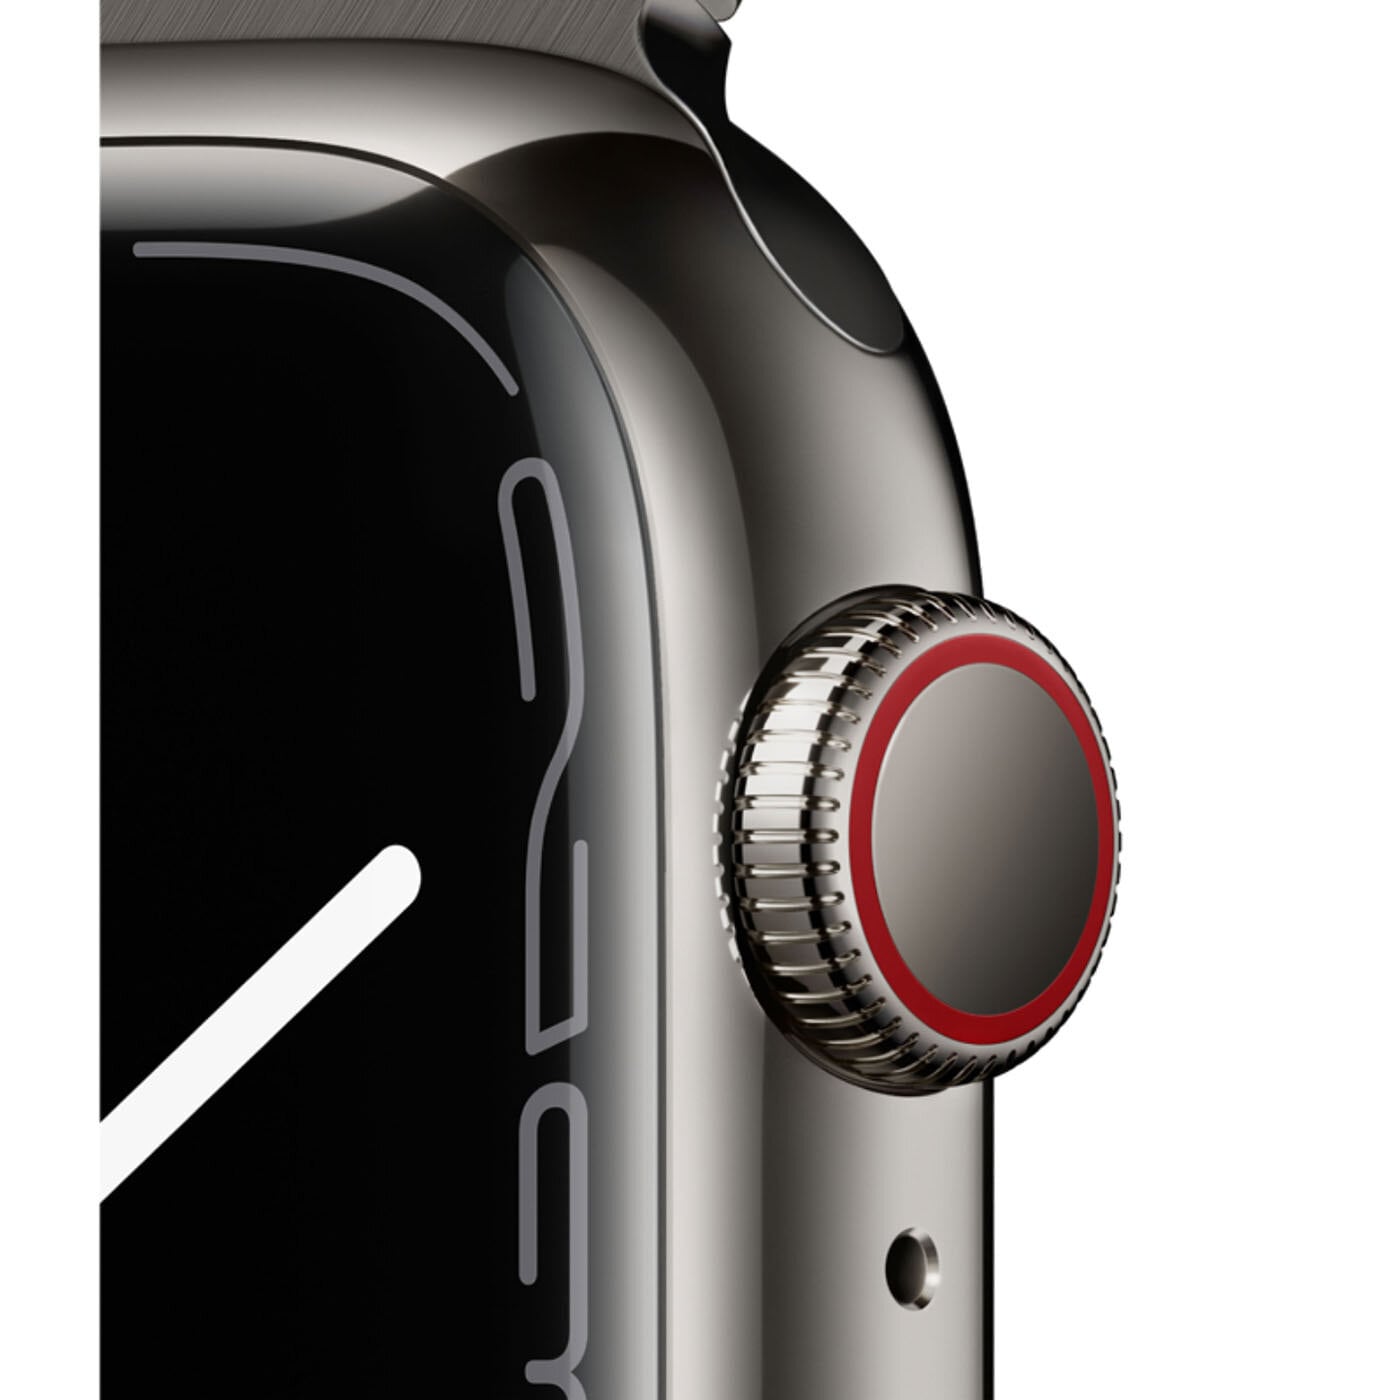 Apple Watch Series 7 Rostfri stålboett